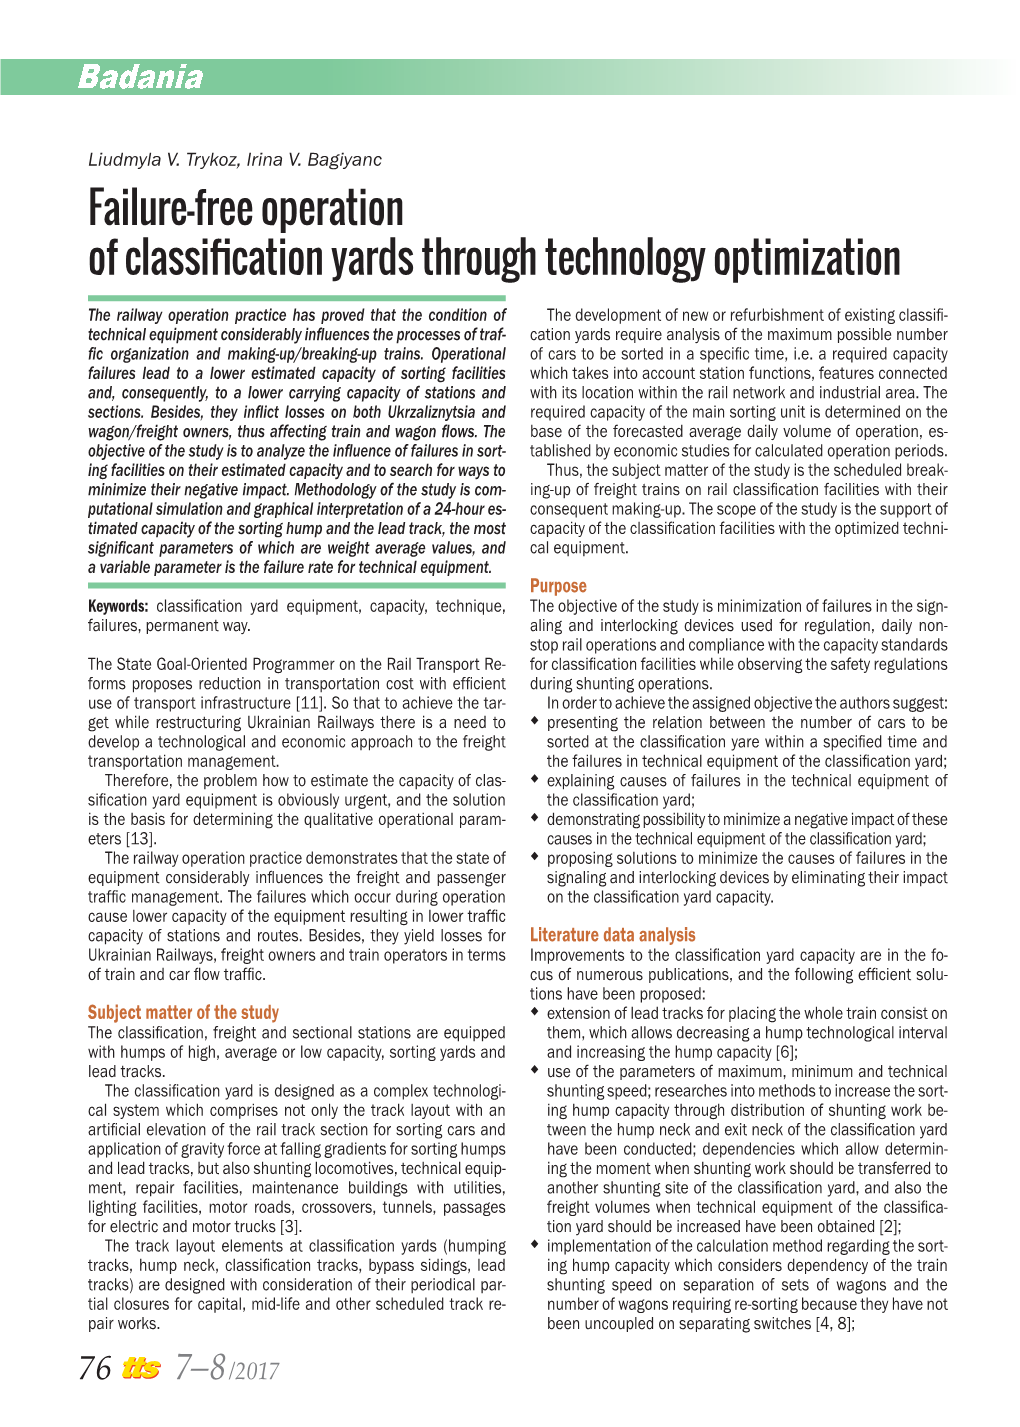 Failure-Free Operation of Classification Yards Through Technology Optimization